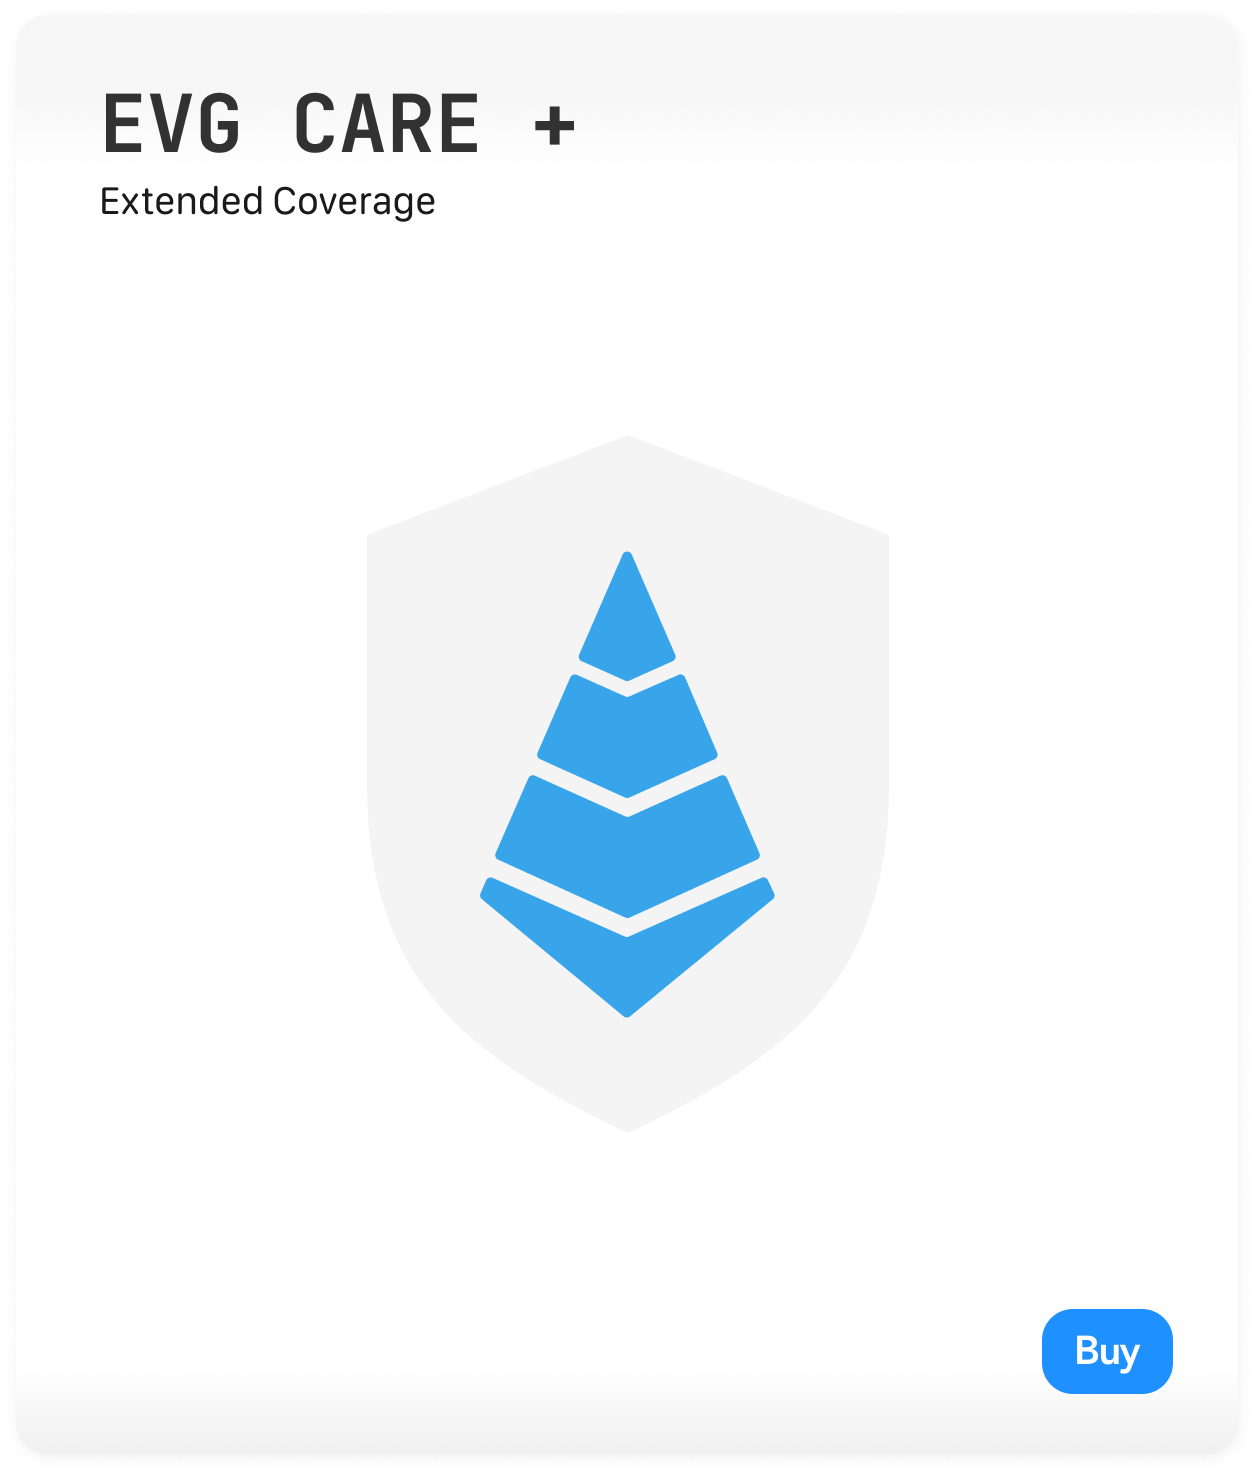 EVG Care +